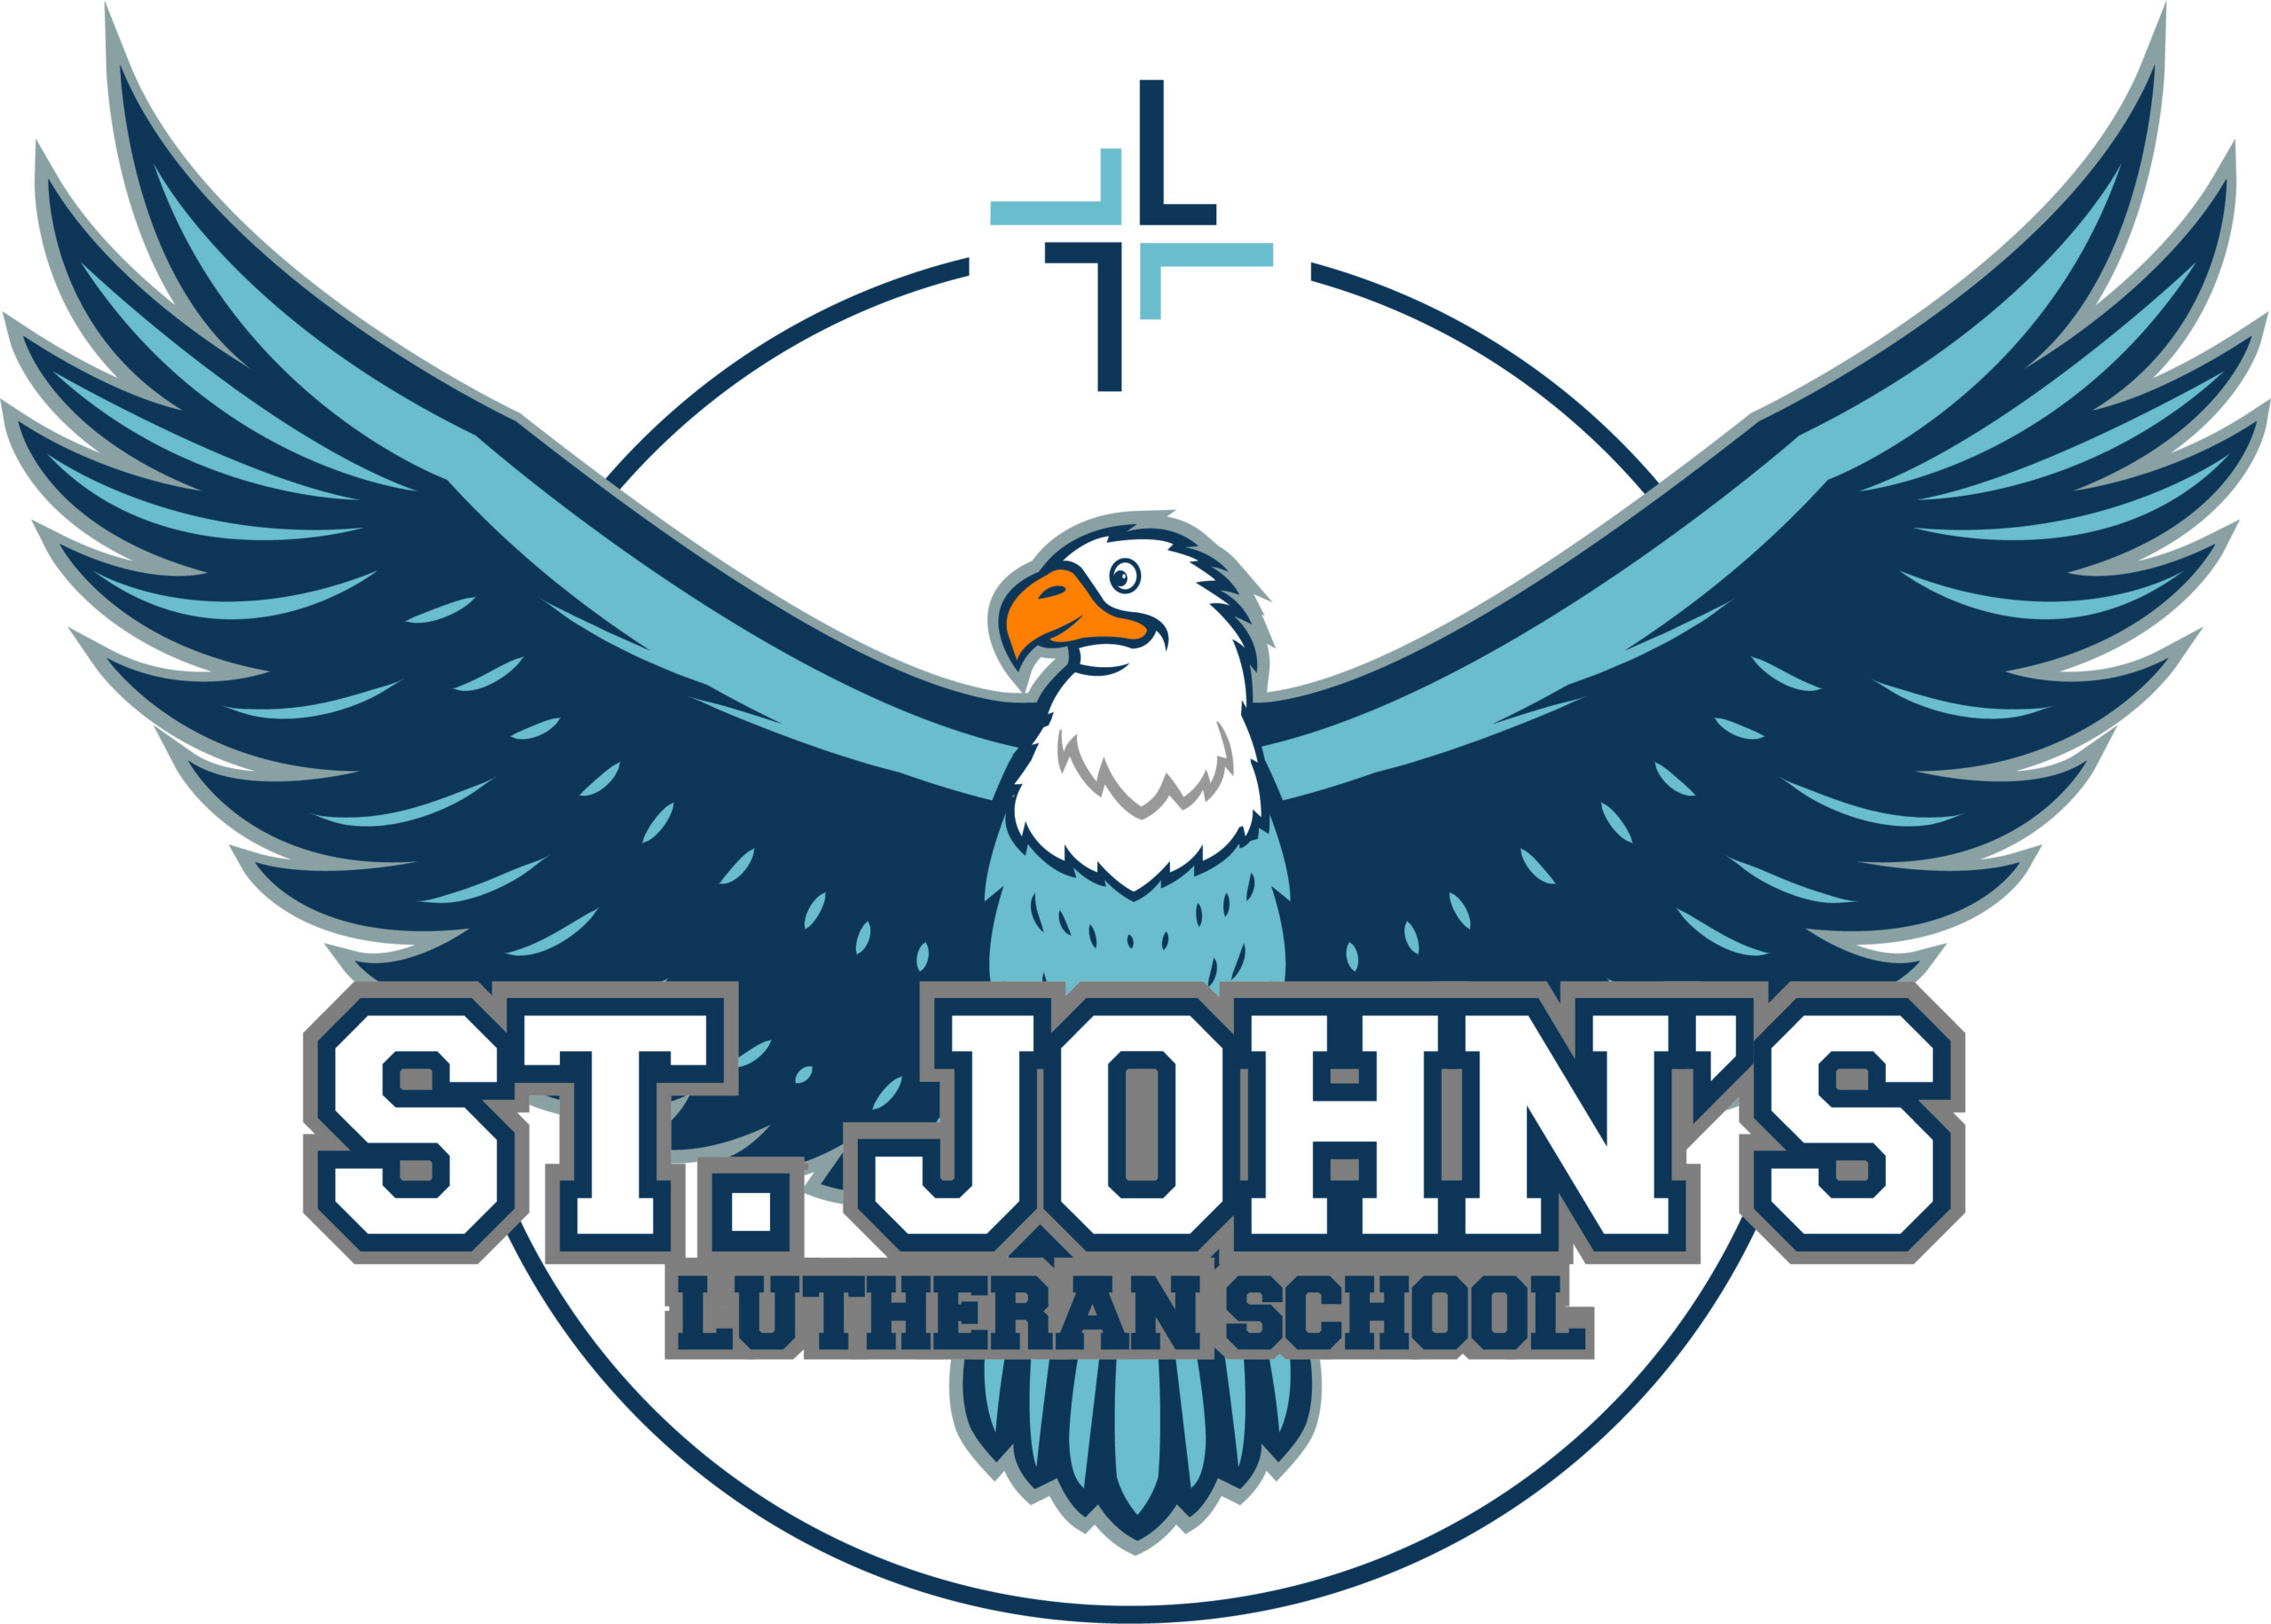 St. John's Lutheran School NYA, MN